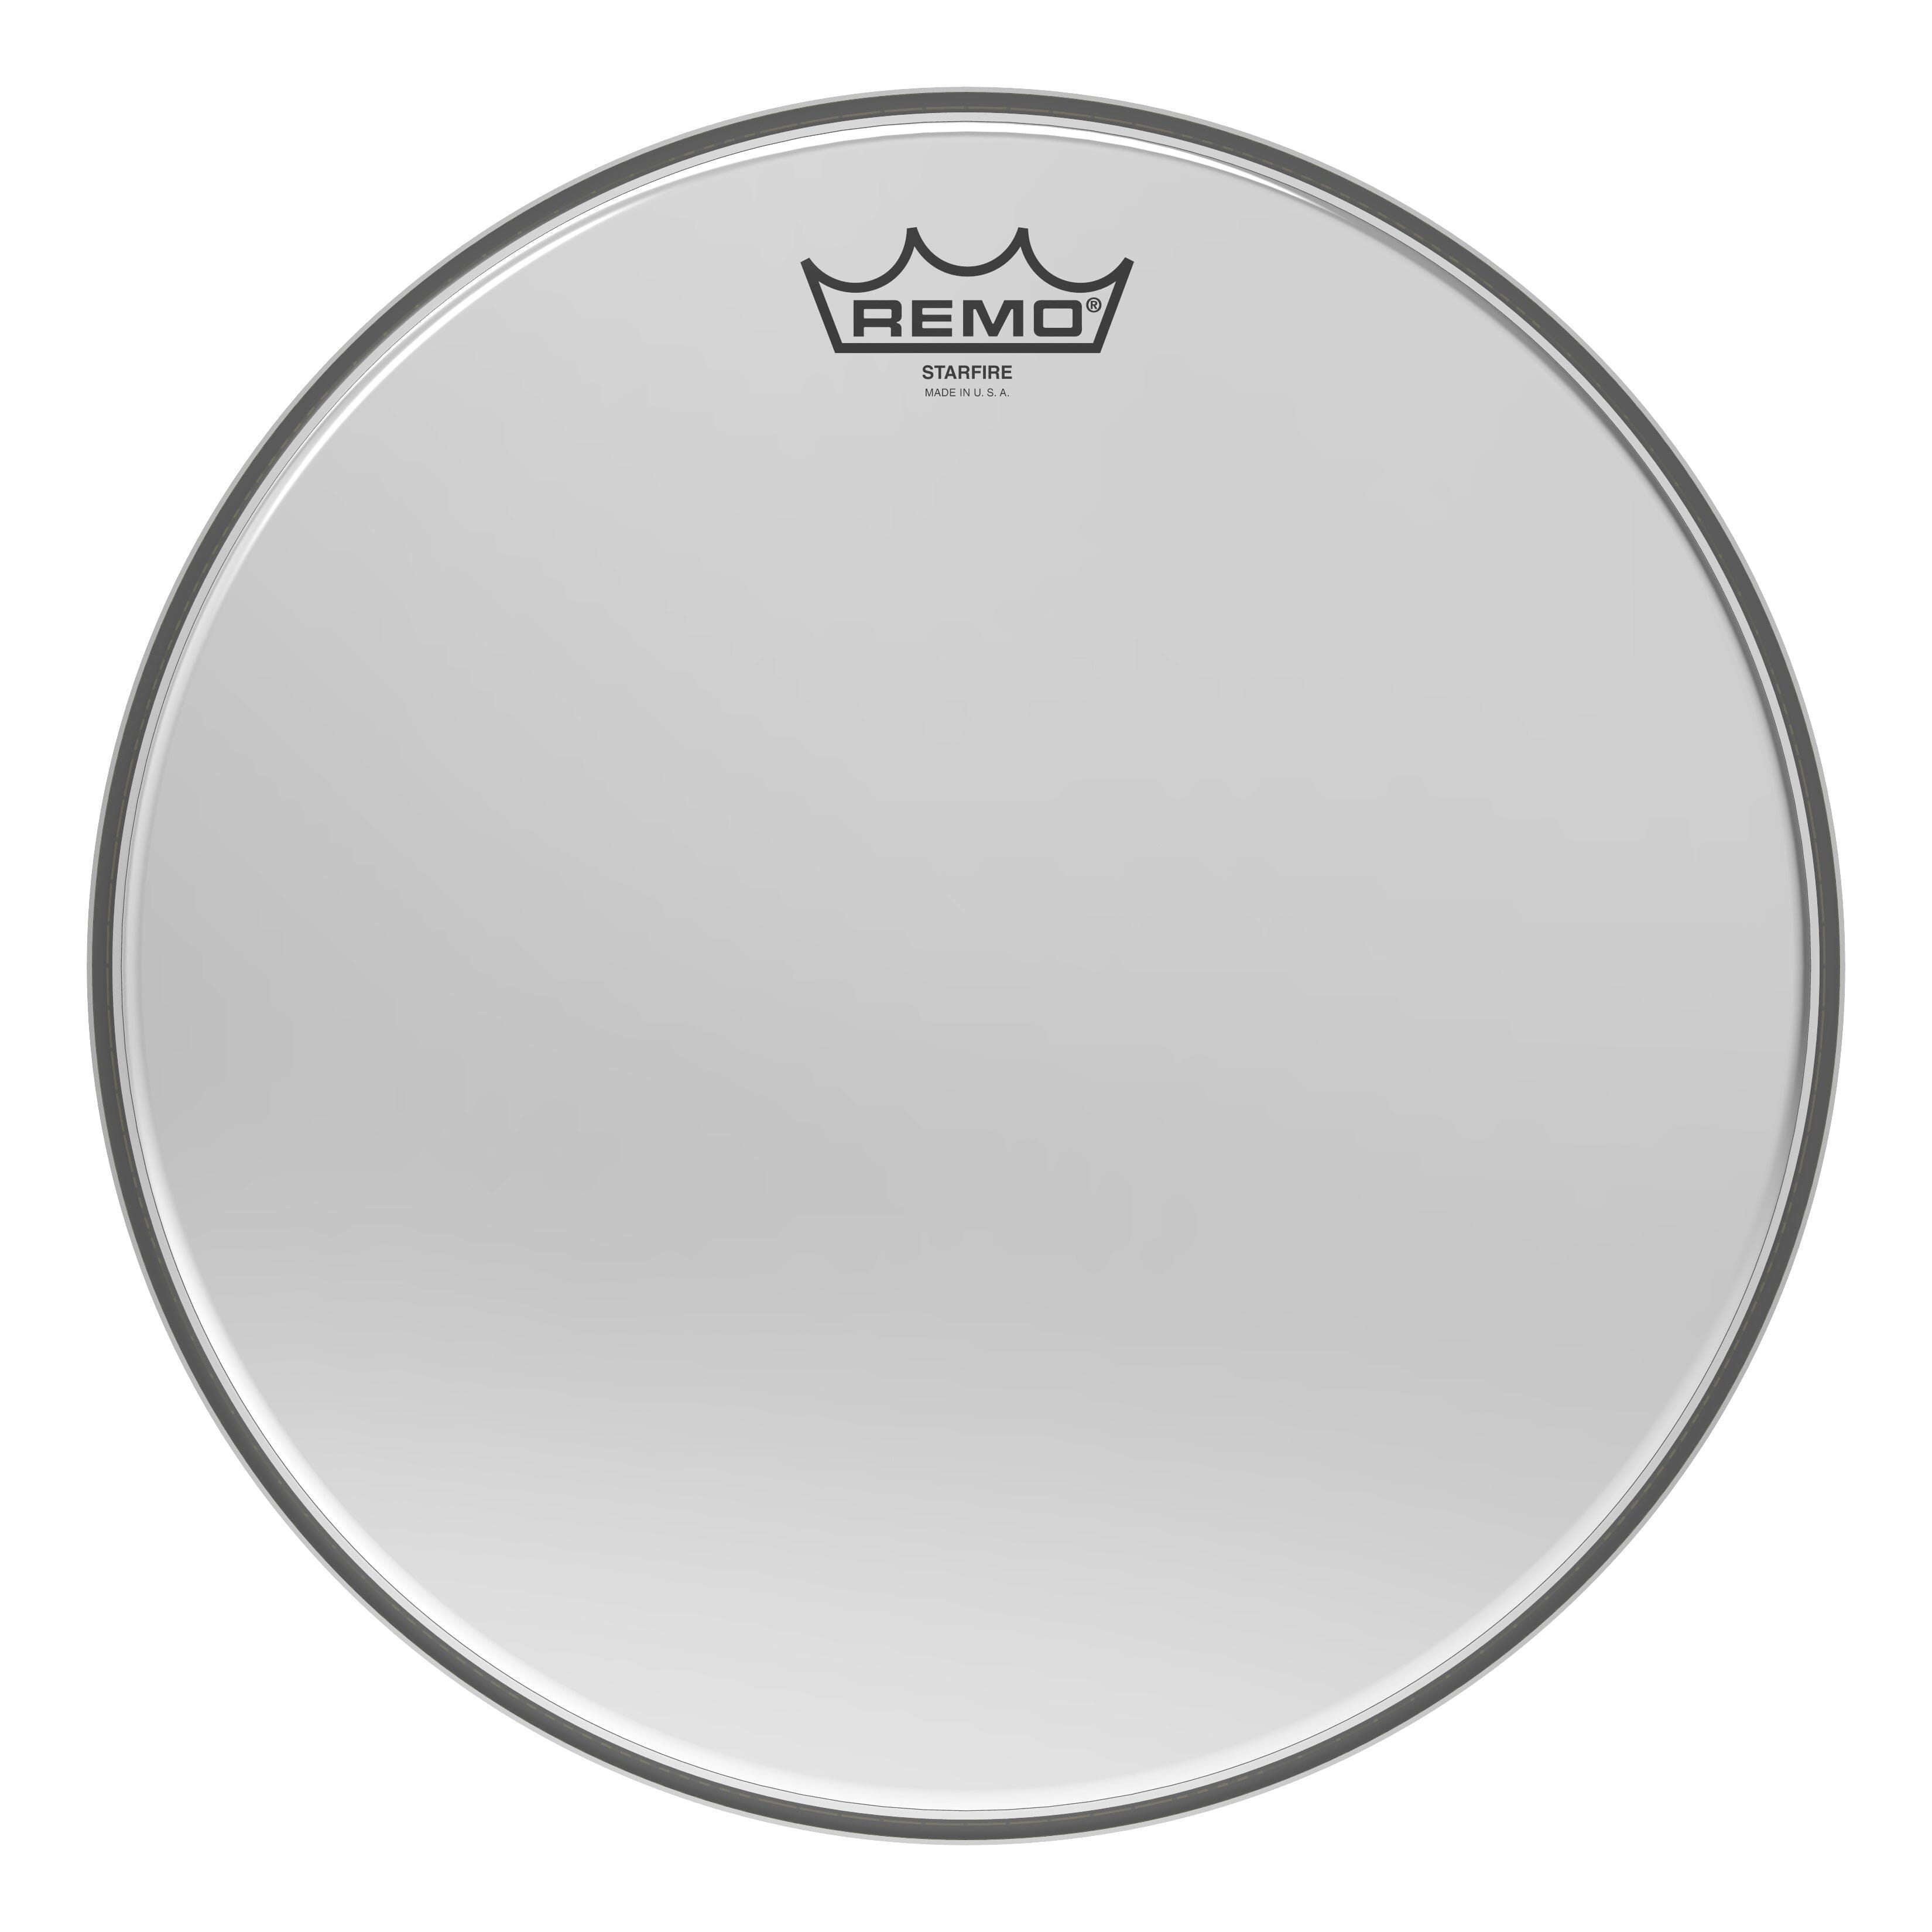 Remo 13" Ambassador Starfire Drum Head, Chrome (CR-0013-00) Drum Heads Remo 